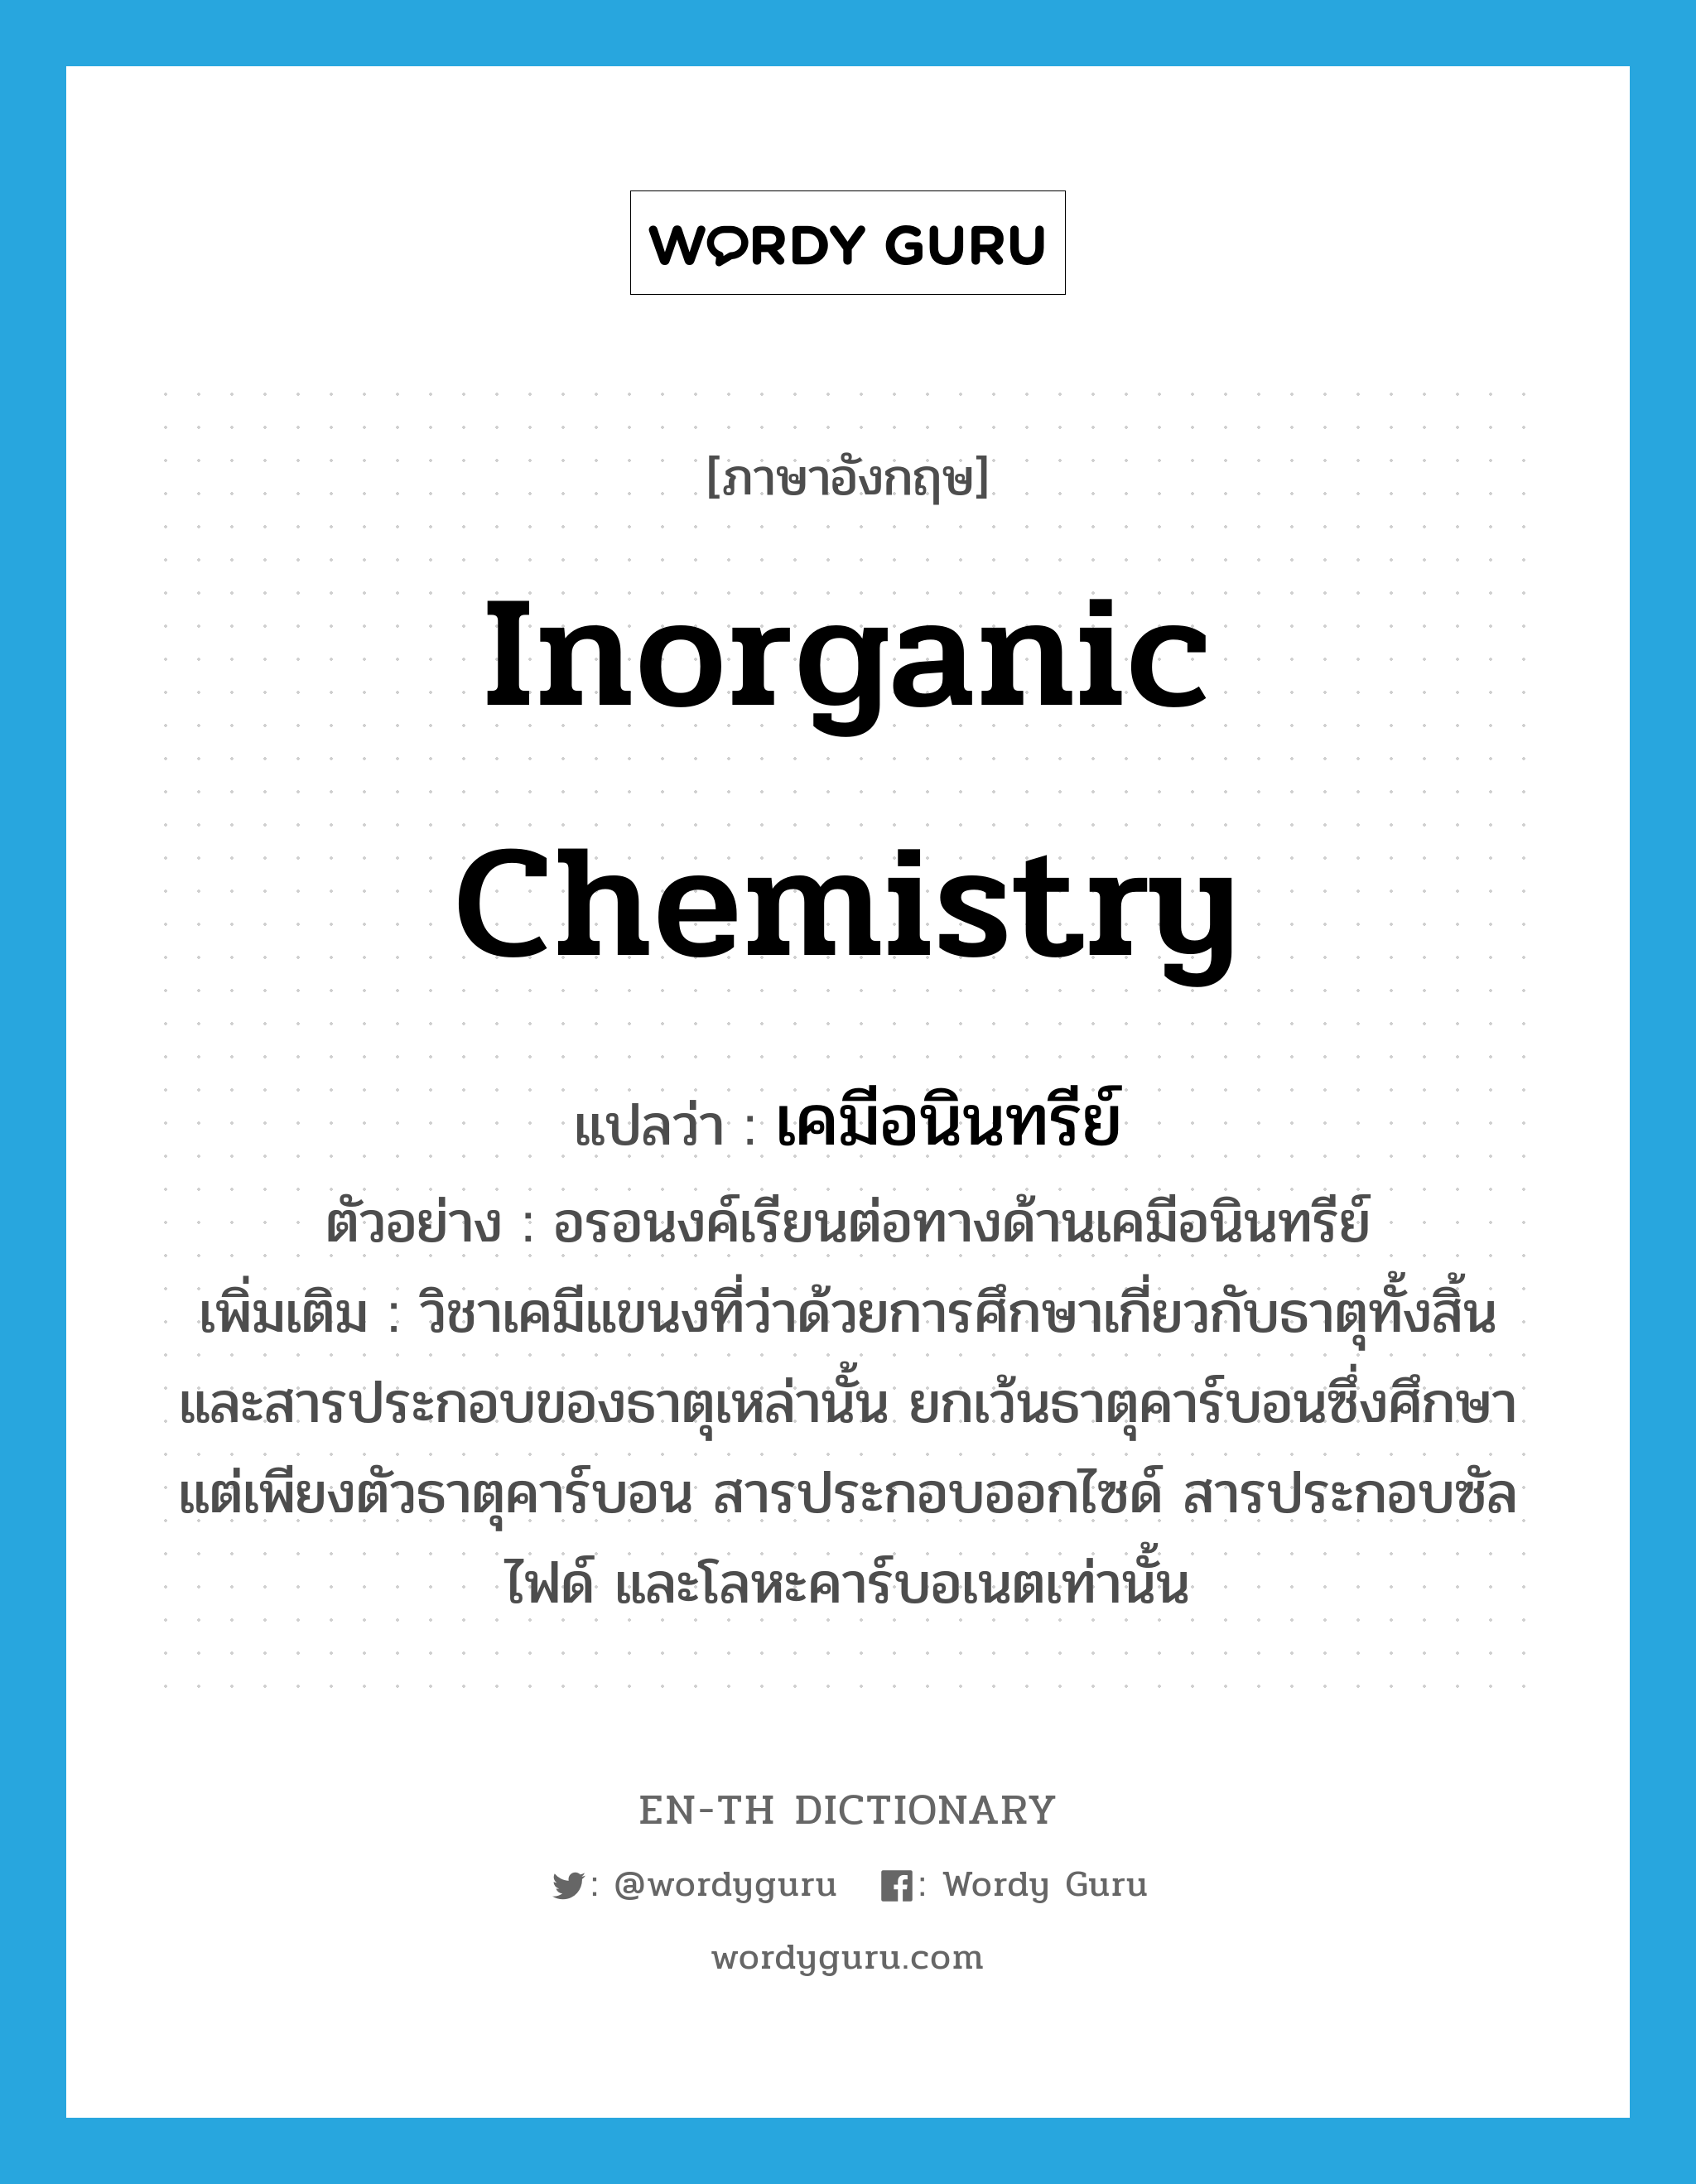 inorganic chemistry แปลว่า?, คำศัพท์ภาษาอังกฤษ inorganic chemistry แปลว่า เคมีอนินทรีย์ ประเภท N ตัวอย่าง อรอนงค์เรียนต่อทางด้านเคมีอนินทรีย์ เพิ่มเติม วิชาเคมีแขนงที่ว่าด้วยการศึกษาเกี่ยวกับธาตุทั้งสิ้น และสารประกอบของธาตุเหล่านั้น ยกเว้นธาตุคาร์บอนซึ่งศึกษาแต่เพียงตัวธาตุคาร์บอน สารประกอบออกไซด์ สารประกอบซัลไฟด์ และโลหะคาร์บอเนตเท่านั้น หมวด N